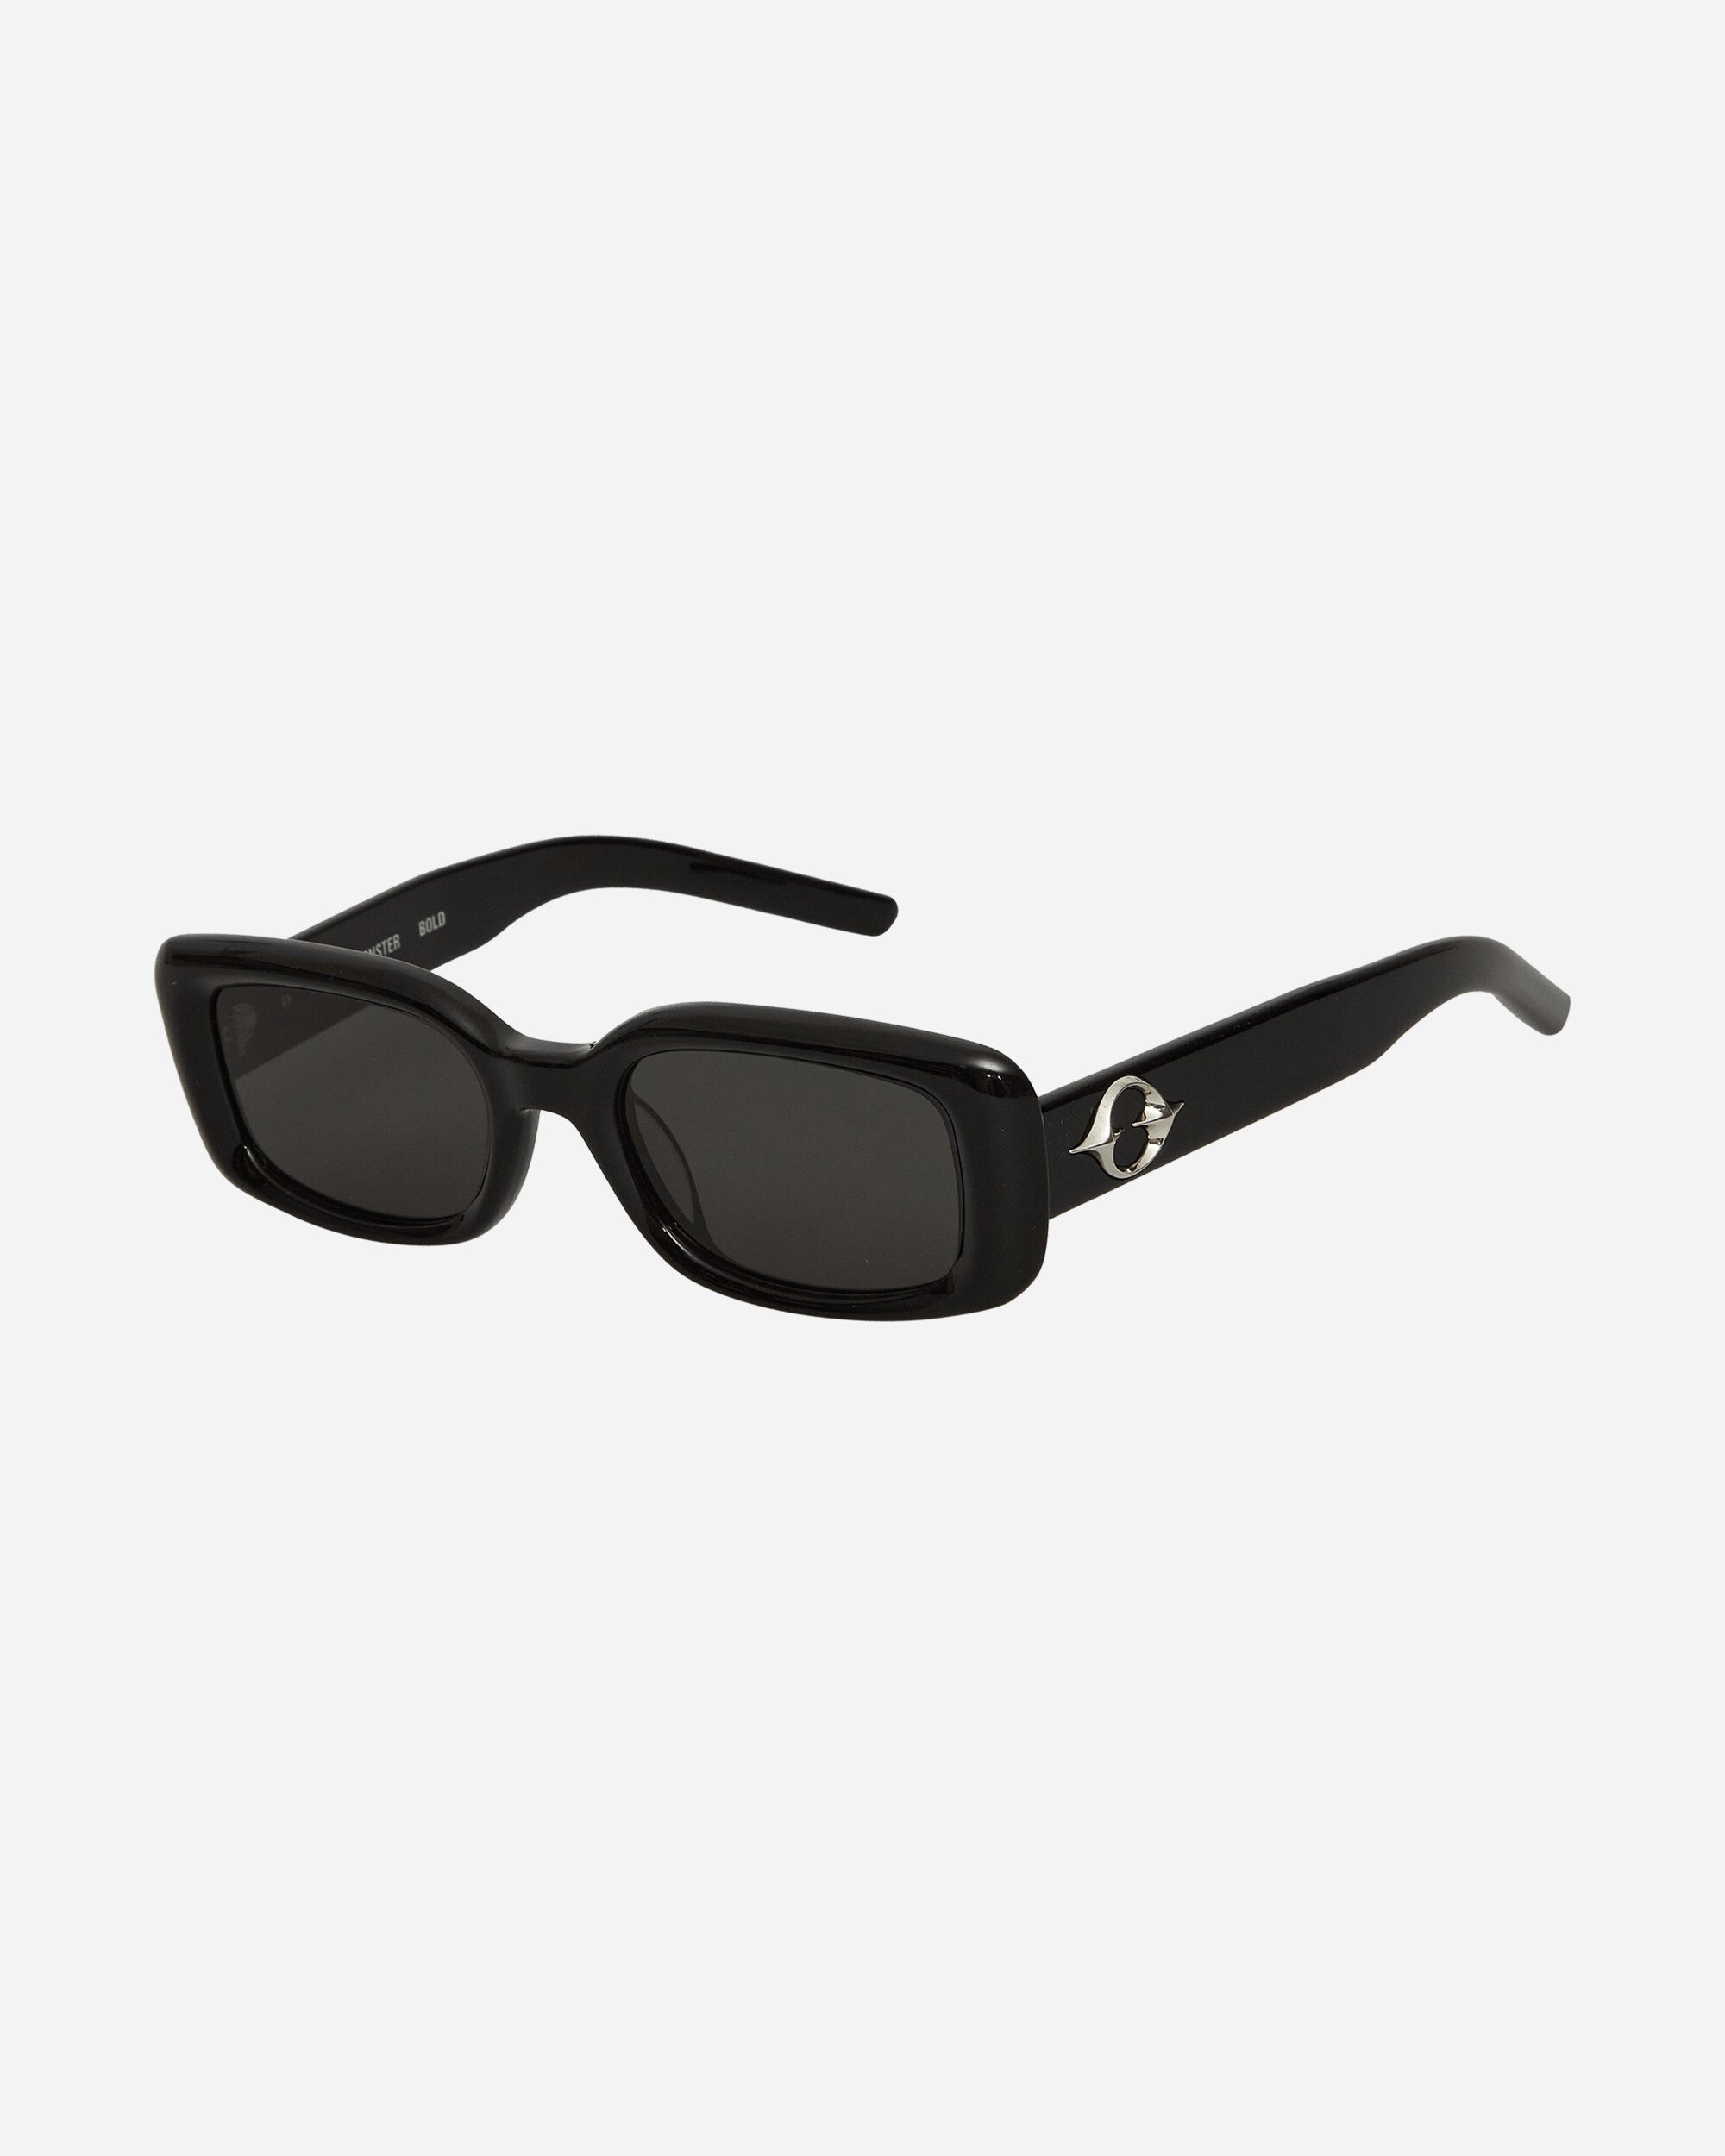 The Bell 01 Sunglasses Black